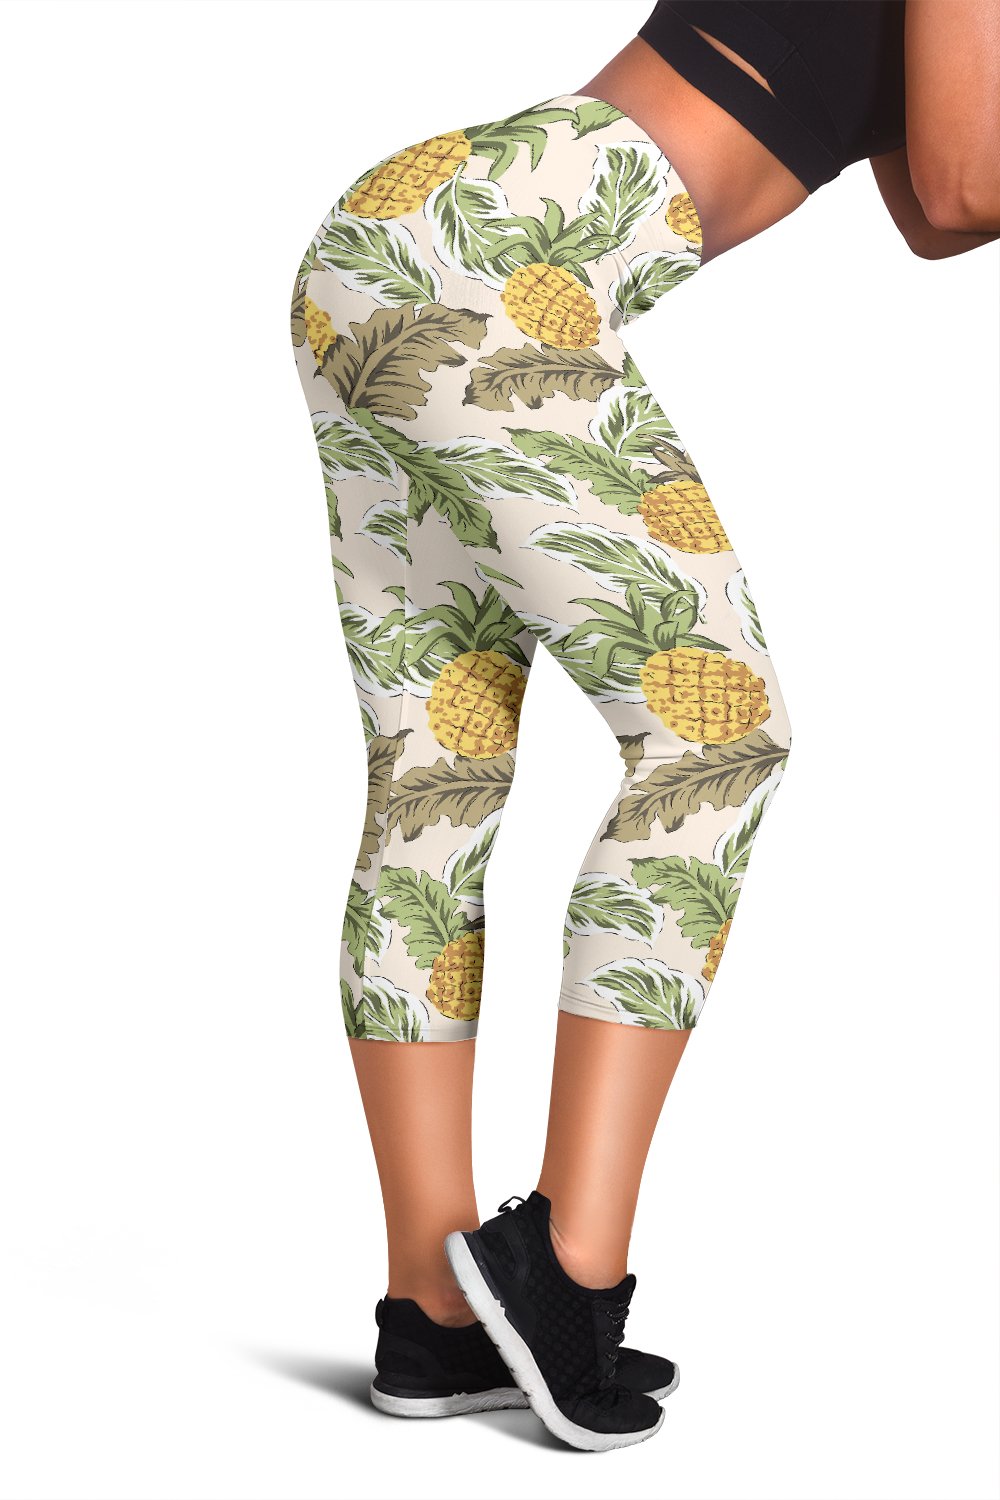 Pineapple Vintage Tropical Leaves Women Capris